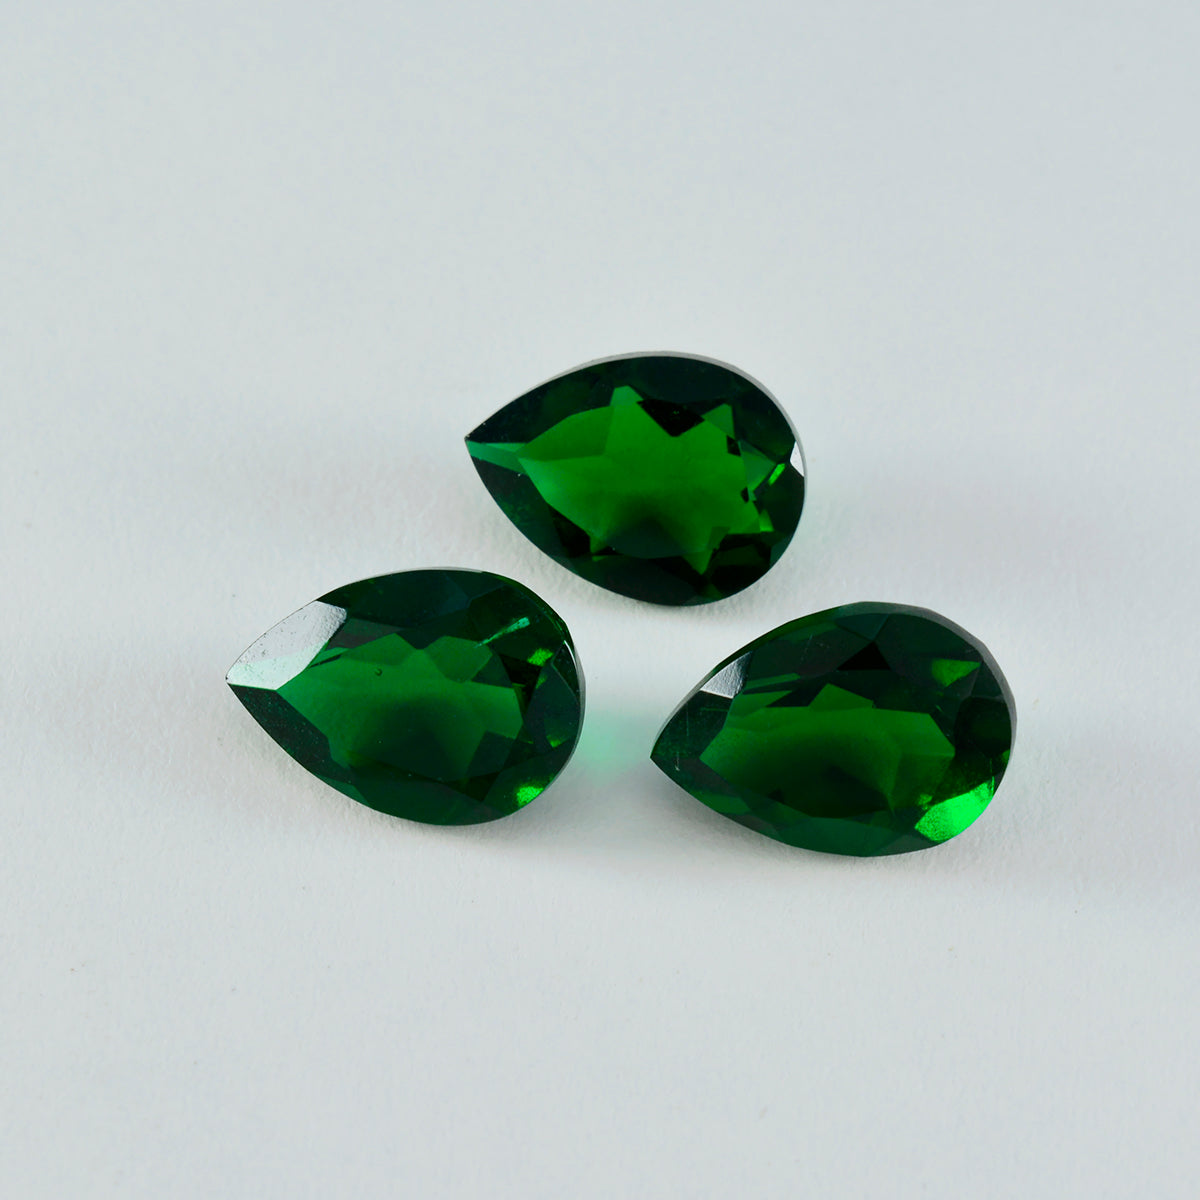 riyogems 1 pz verde smeraldo cz sfaccettato 12x16 mm a forma di pera gemme sfuse di ottima qualità